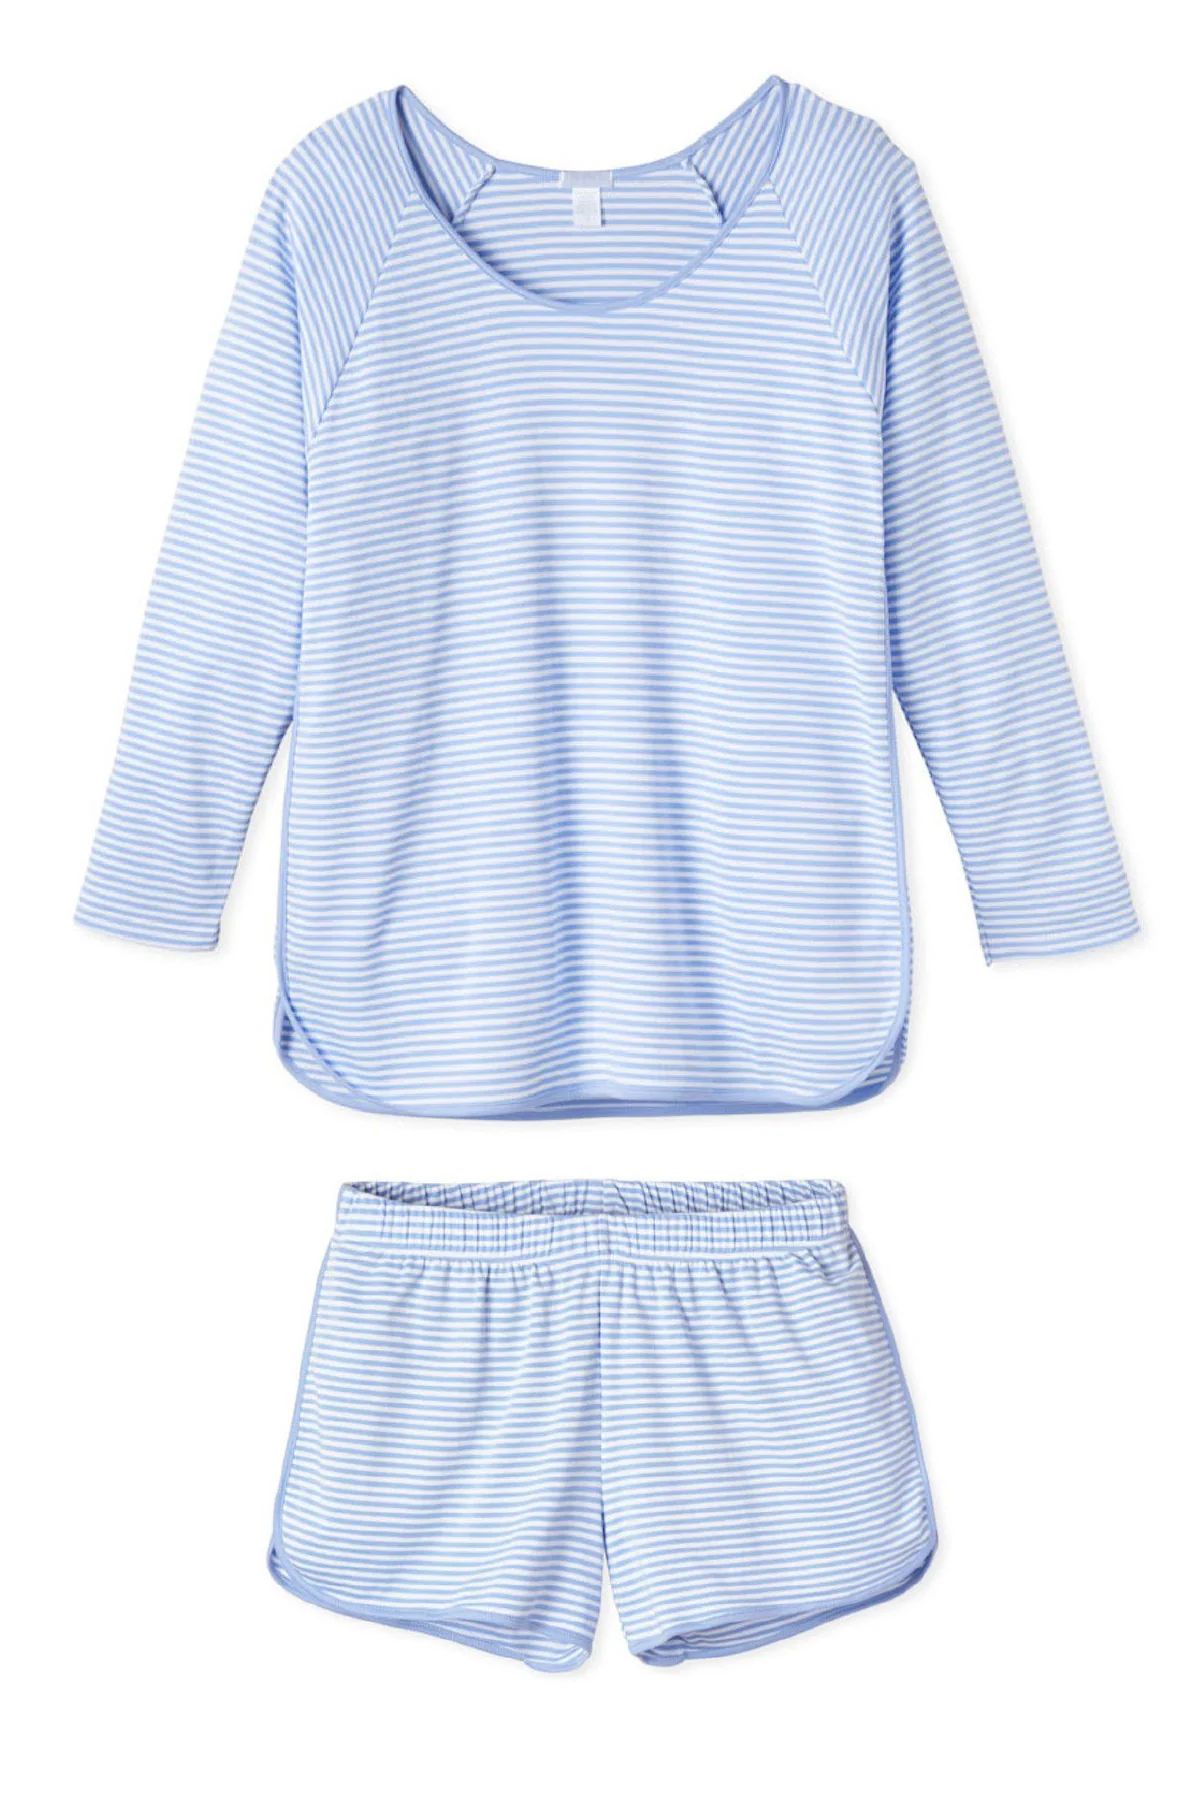 Pima Long-Short Set in Hydrangea | LAKE Pajamas